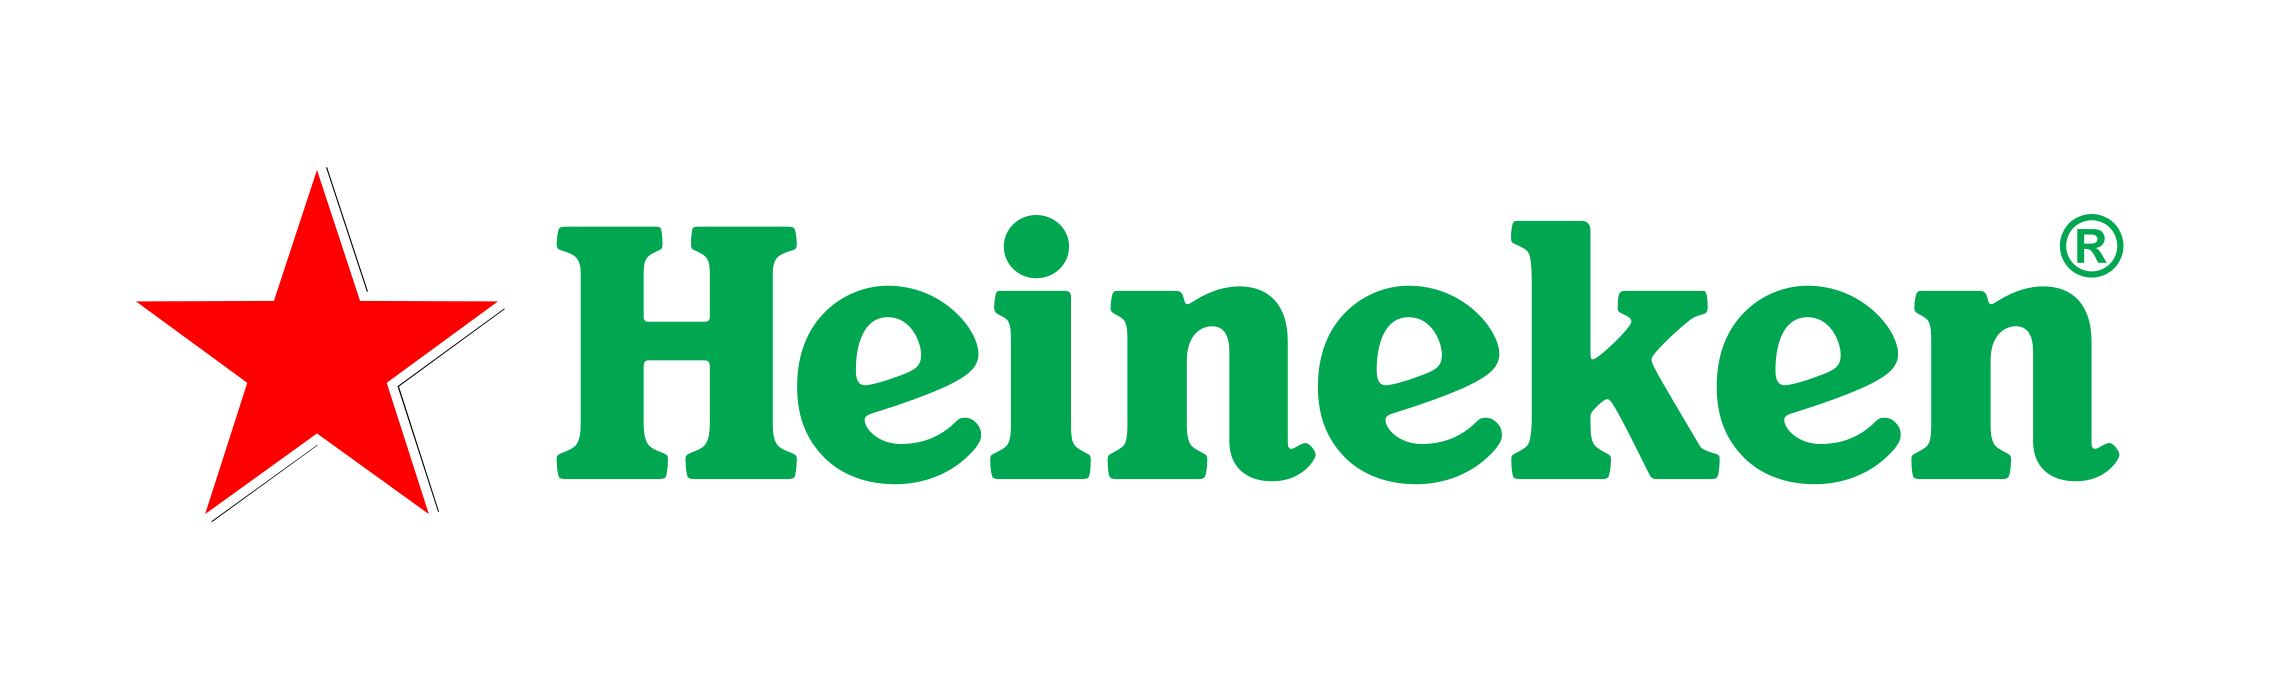 Heineken Logo - Font-Heineken-Logo - 1nspiring